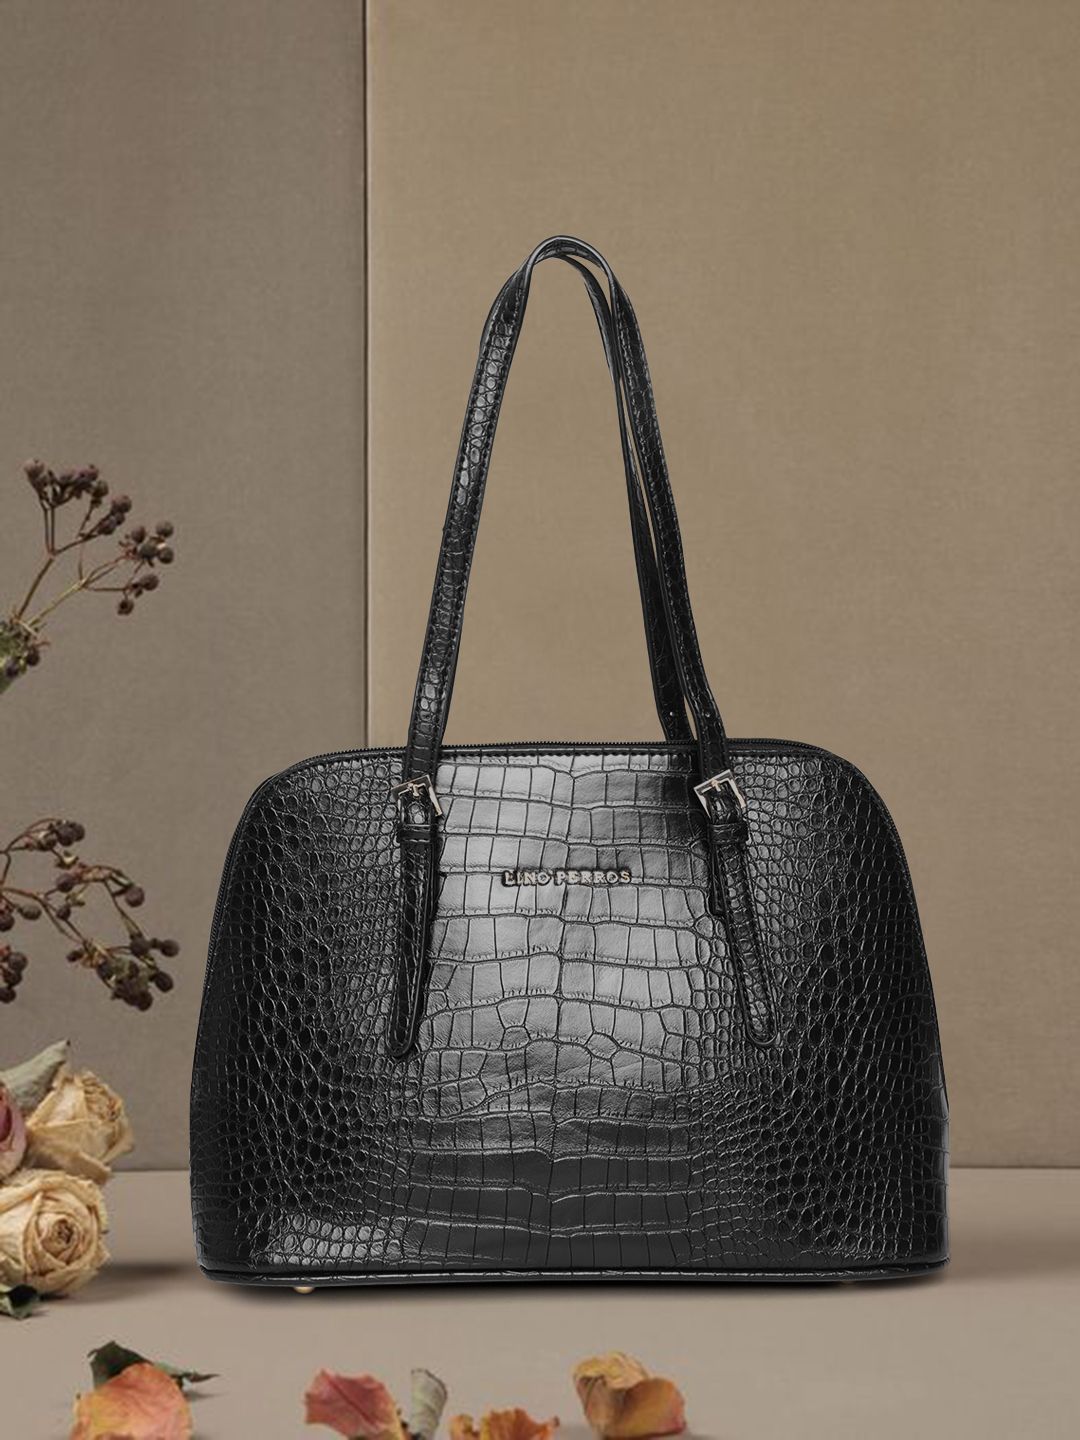 Lino Perros Black Croc Textured Shoulder Bag Price in India